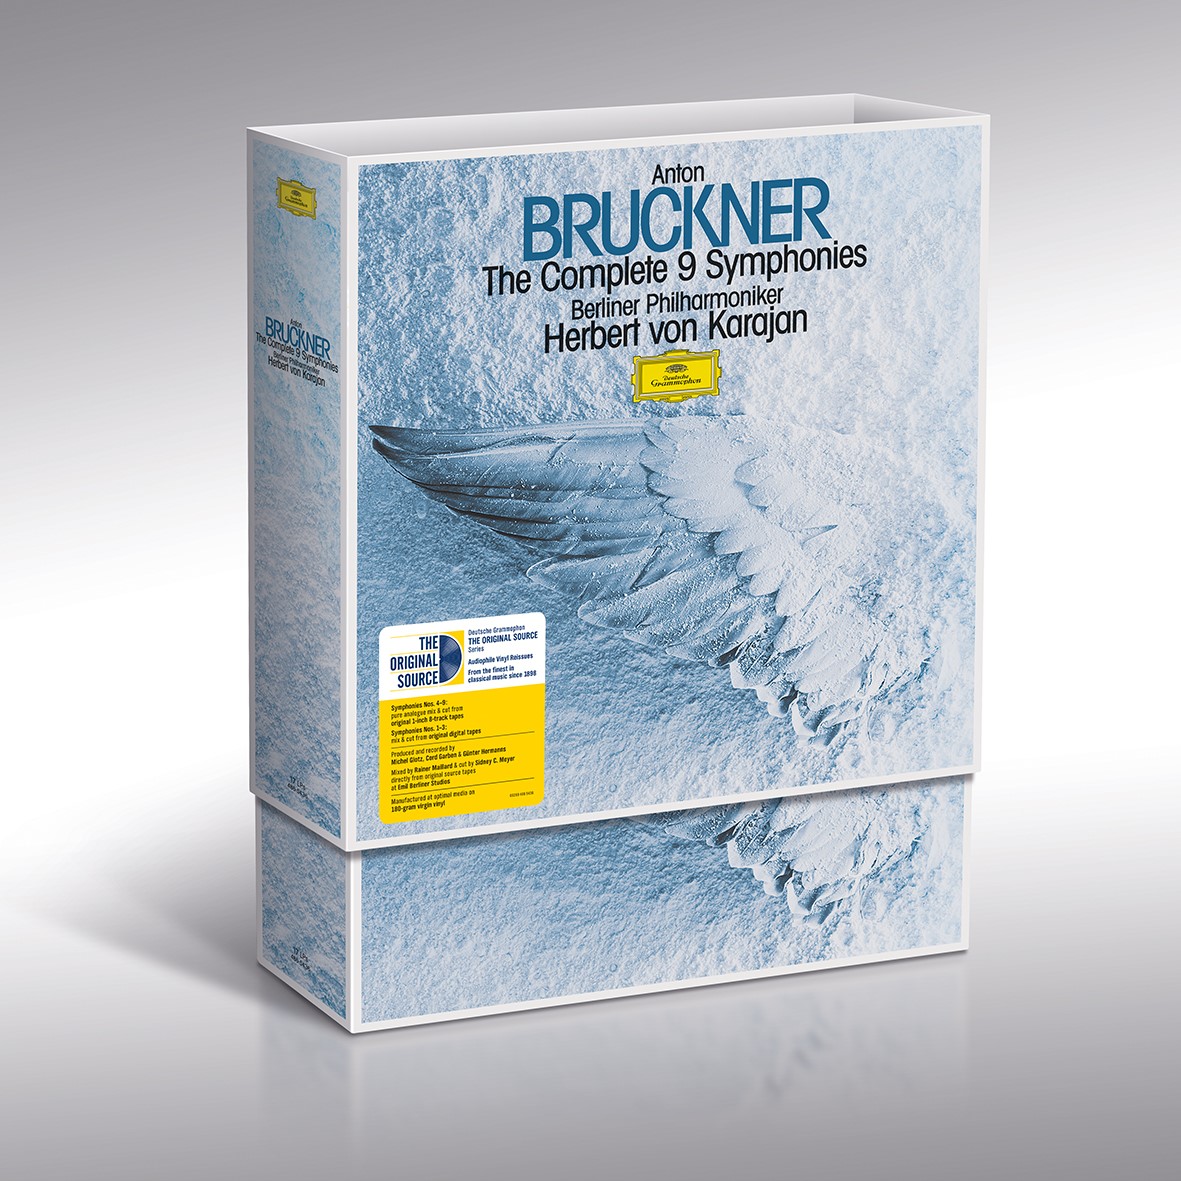 Karajan Bruckner Complete Symphonies DG Original Source vinyl